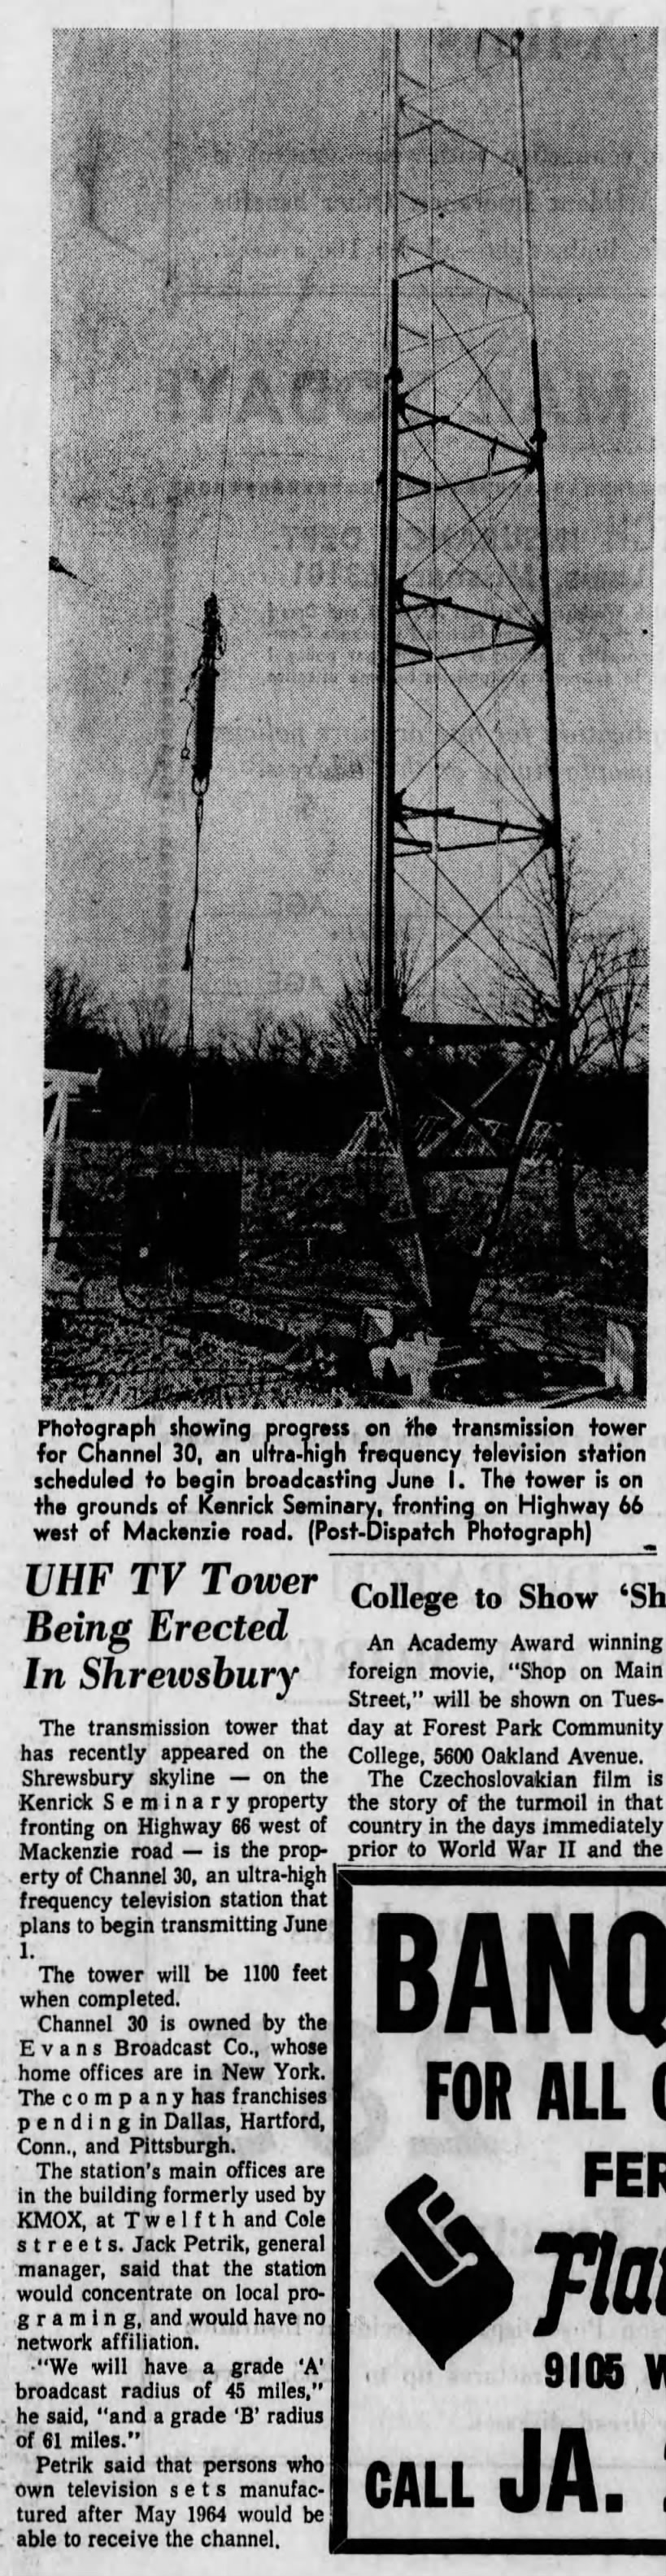 UHF TV Tower Being Erected in Shrewsbury